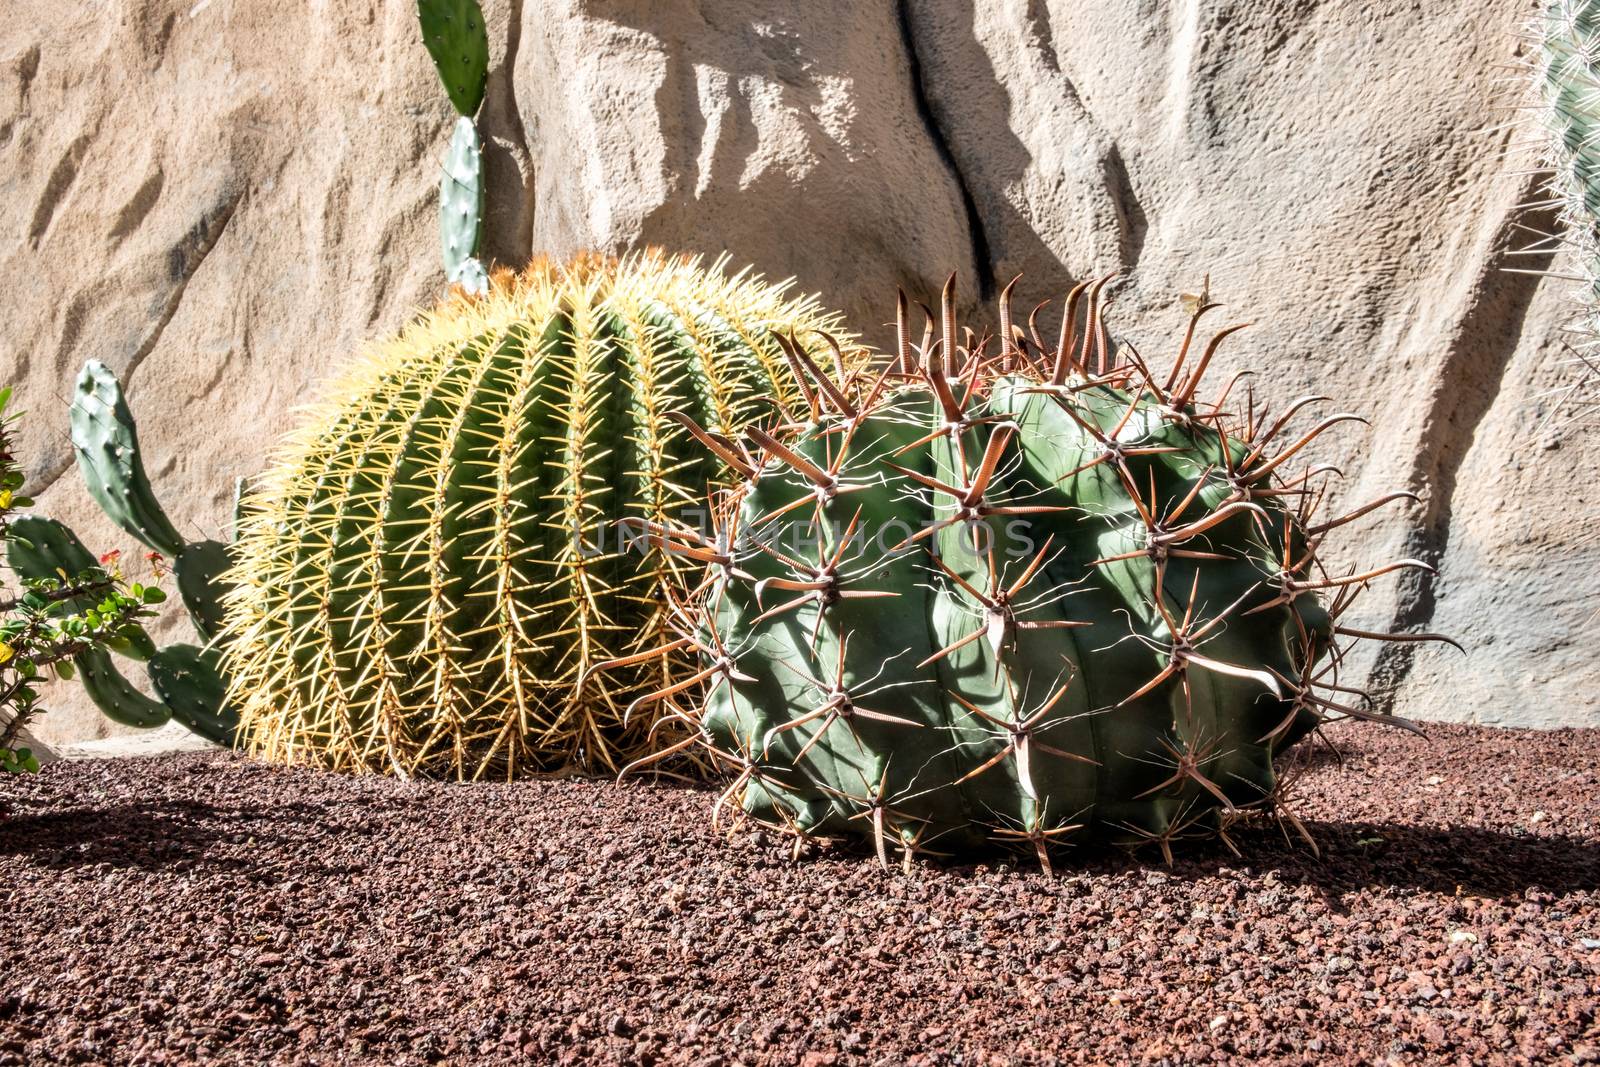 Cactus in sunshine on the Spanish island Fuerteventura